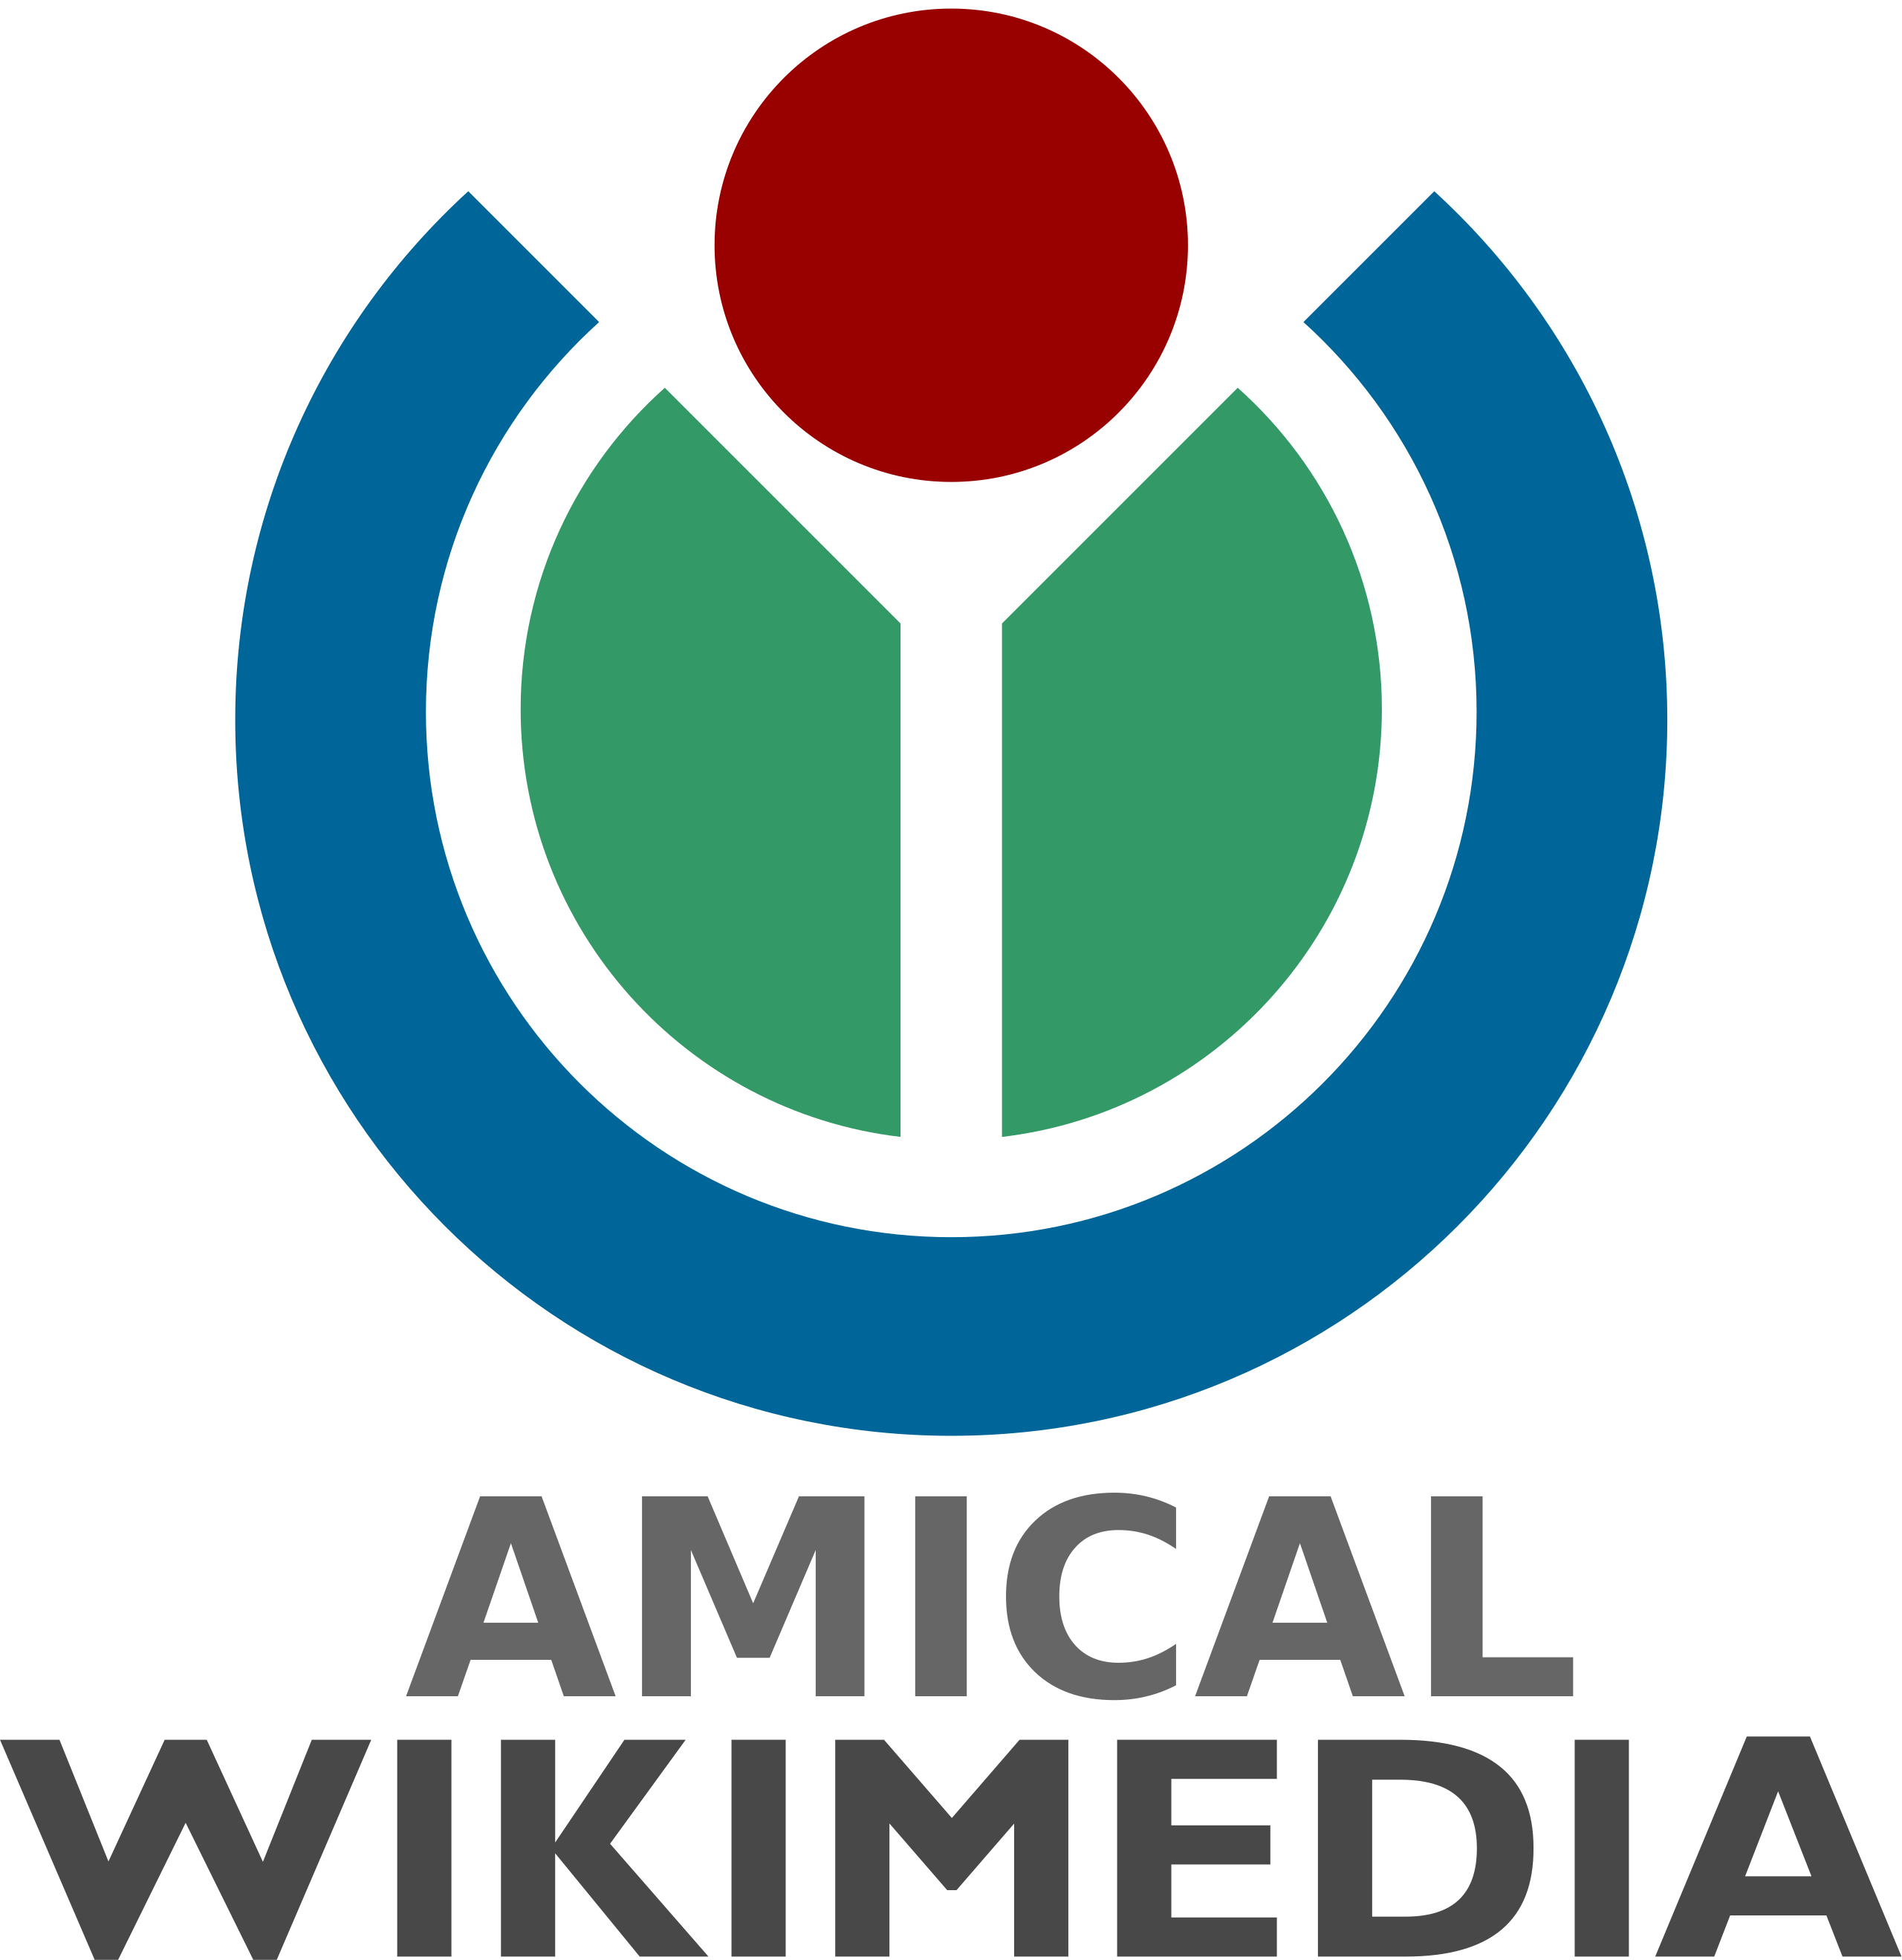 Wikimedia.svg